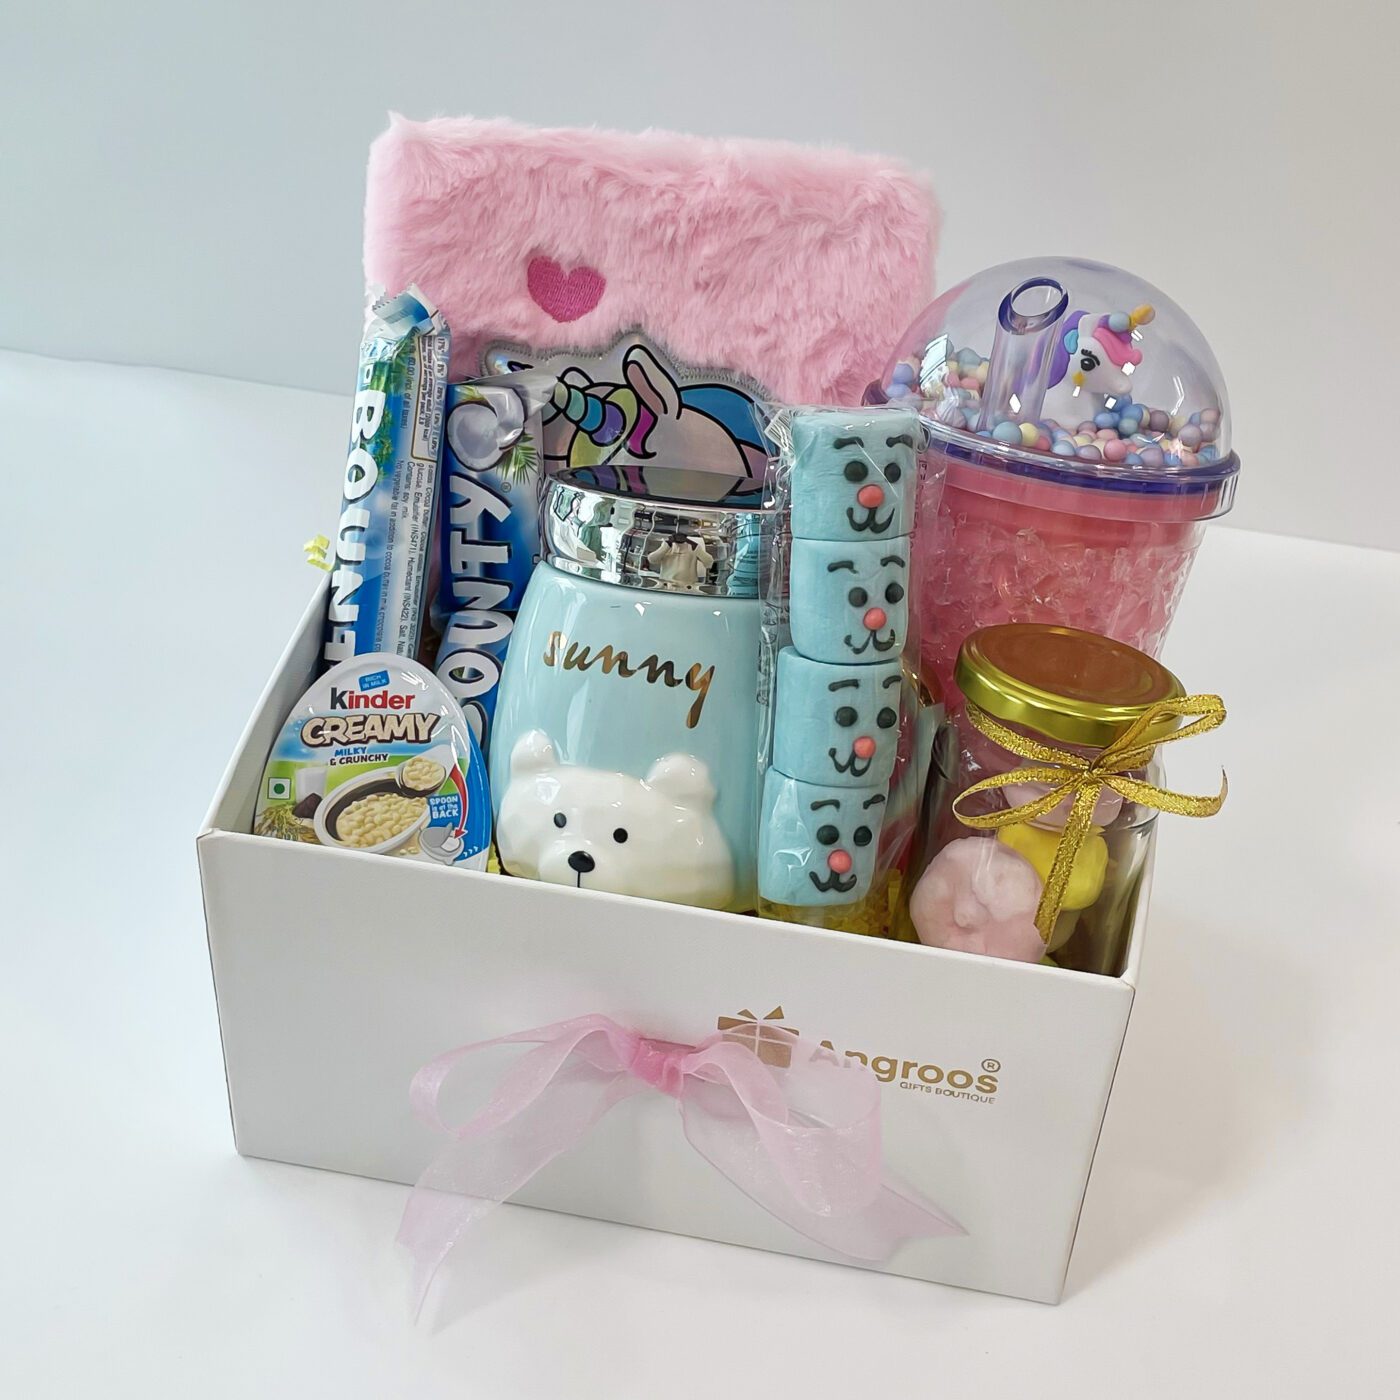 Birthday Gifts For Teenage Girls | Best Online Gift Ideas